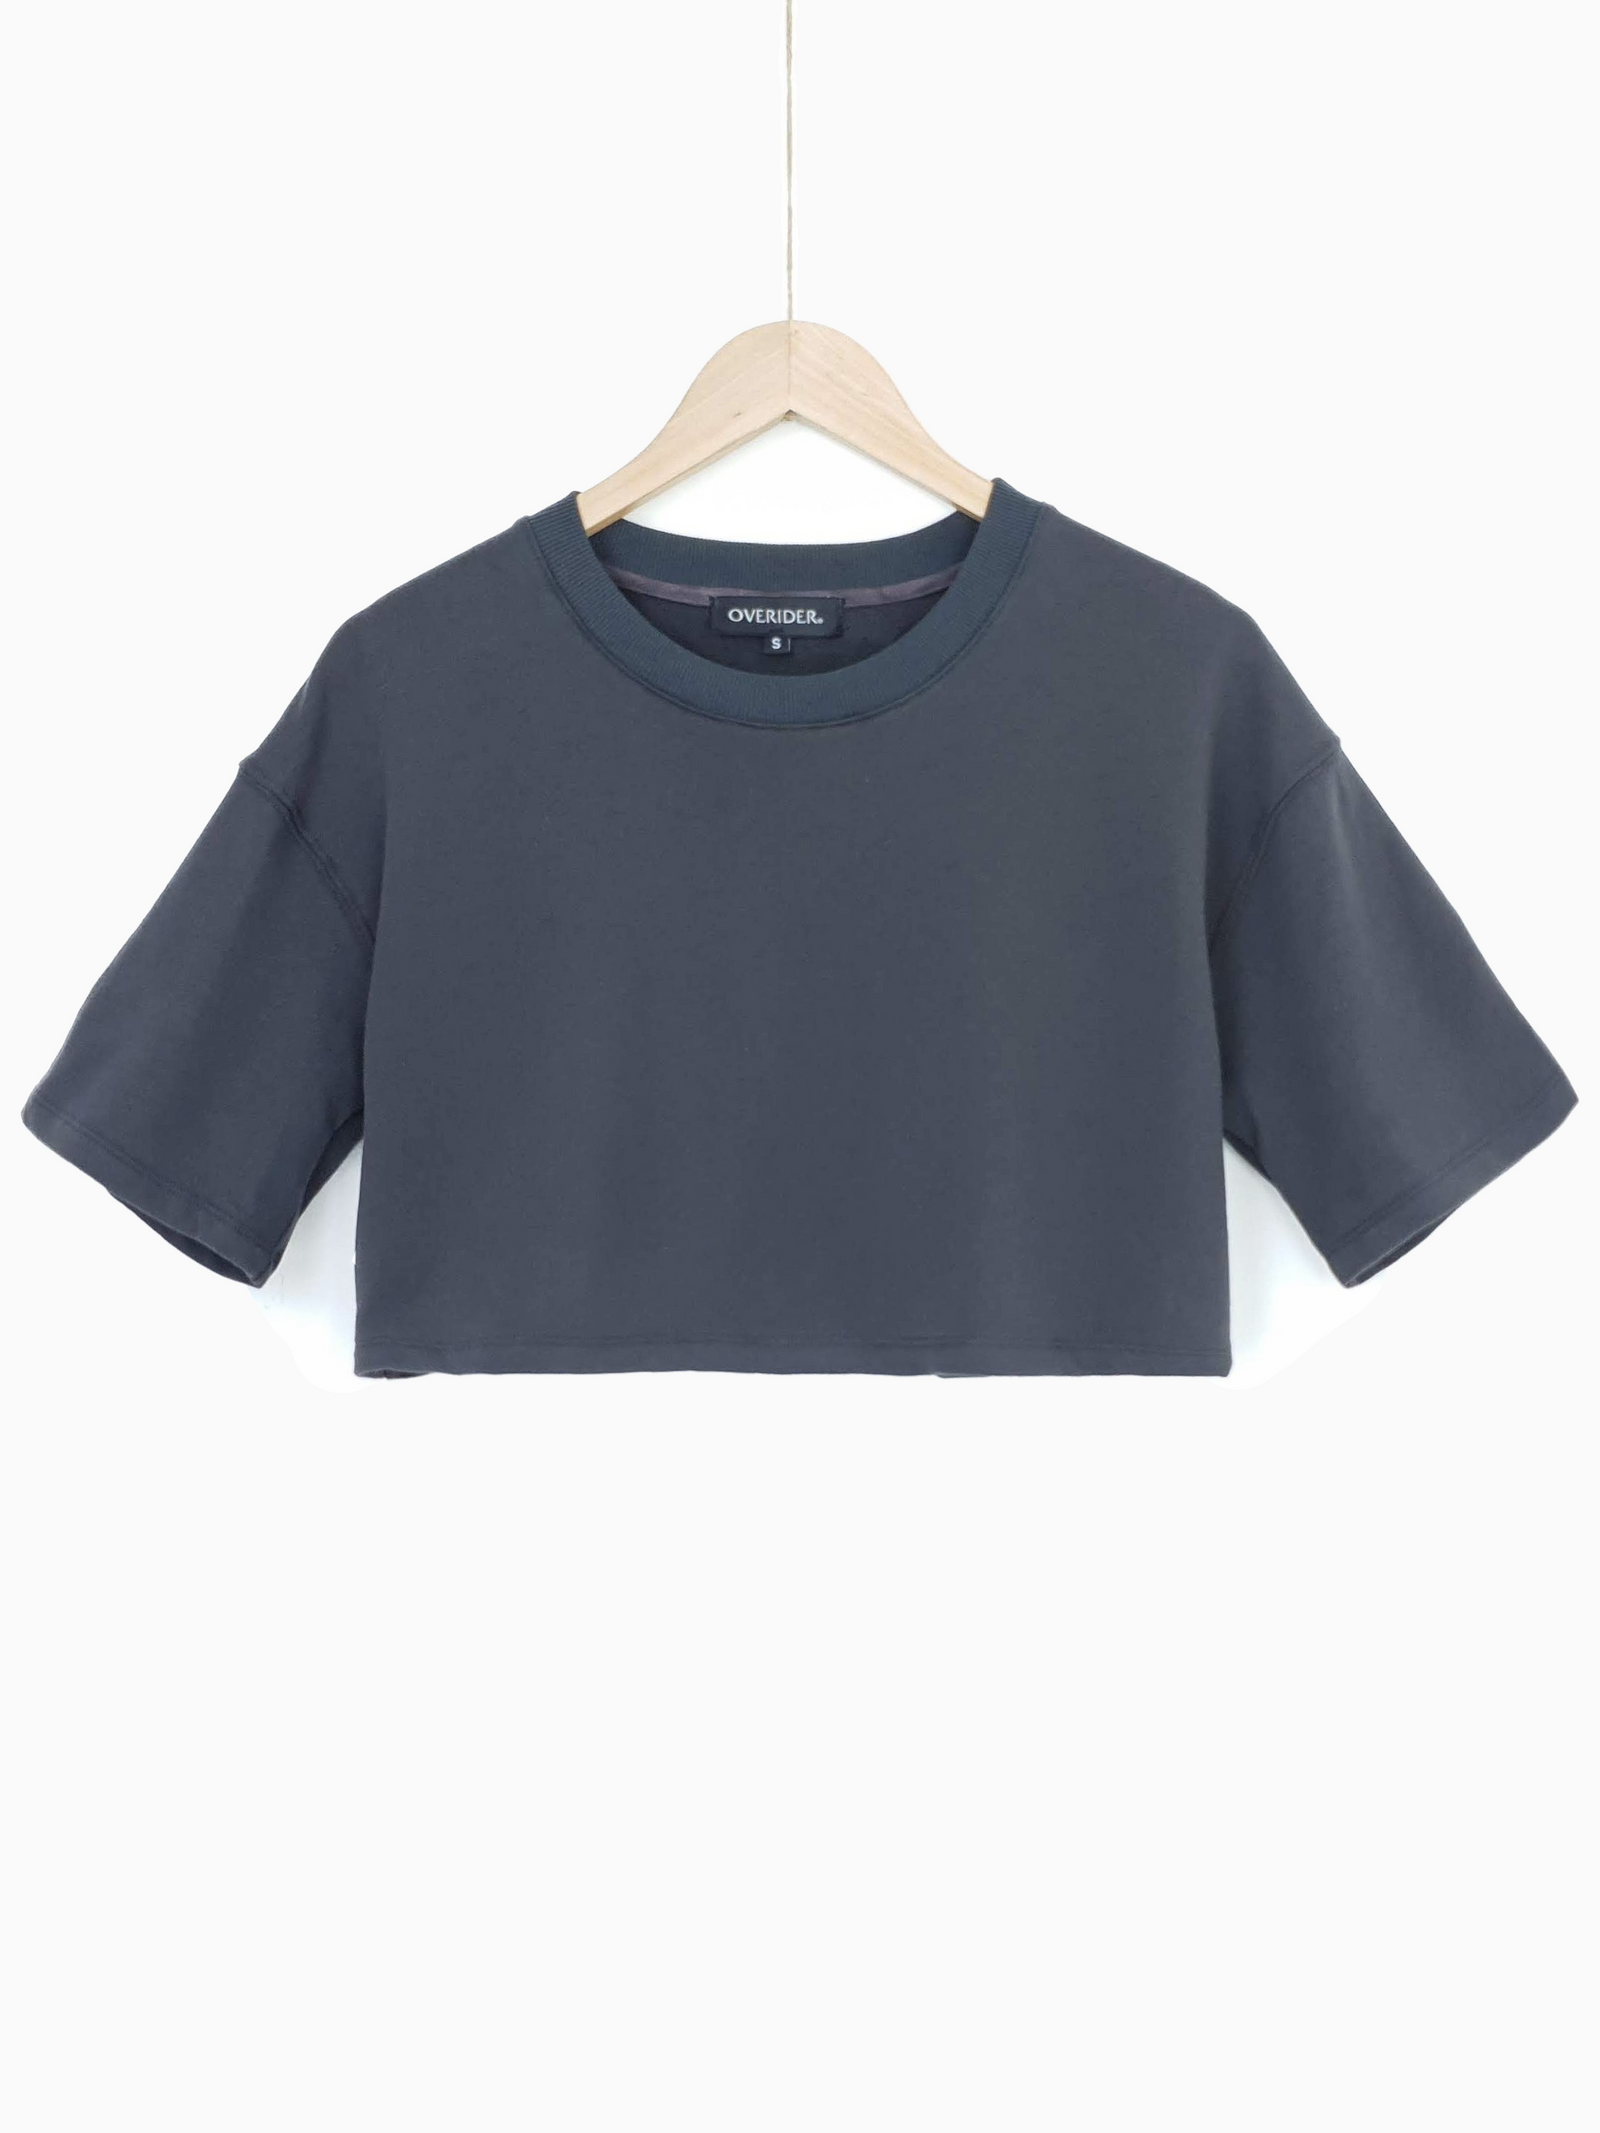 LOLI | Cropped Sweatshirt Top | Anthracite